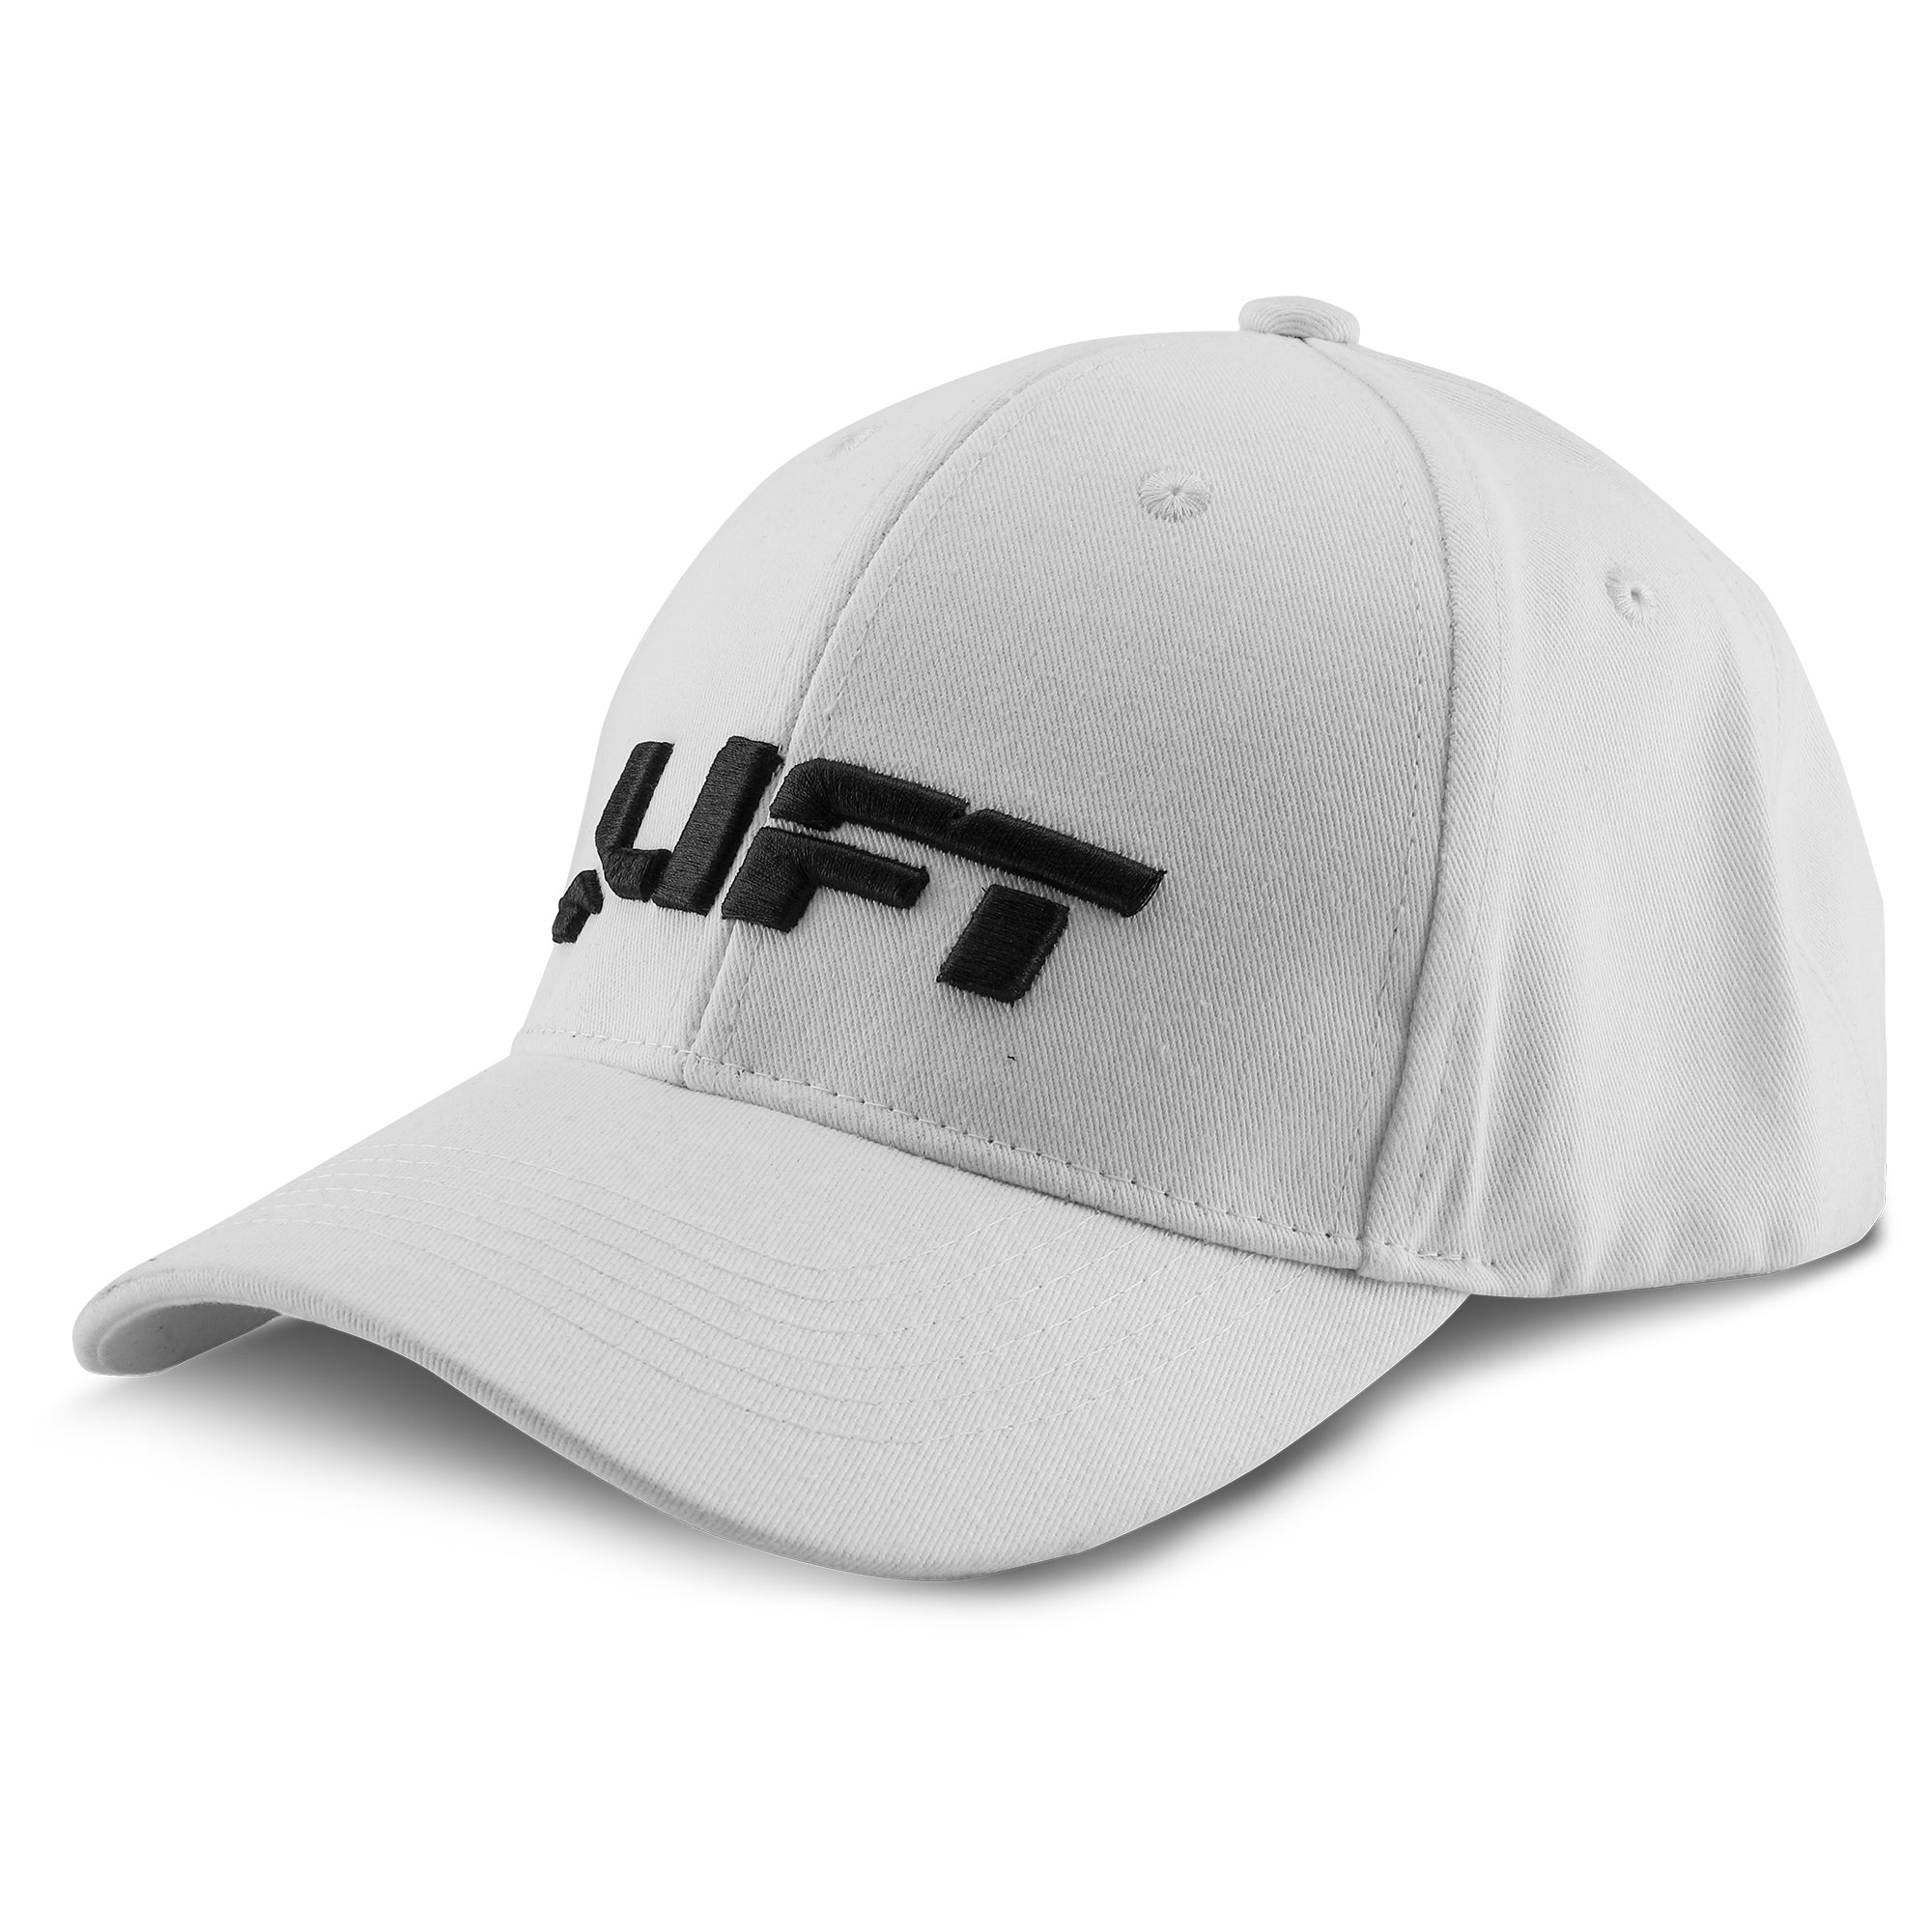 LIFT Safety - Corp Lift Hat